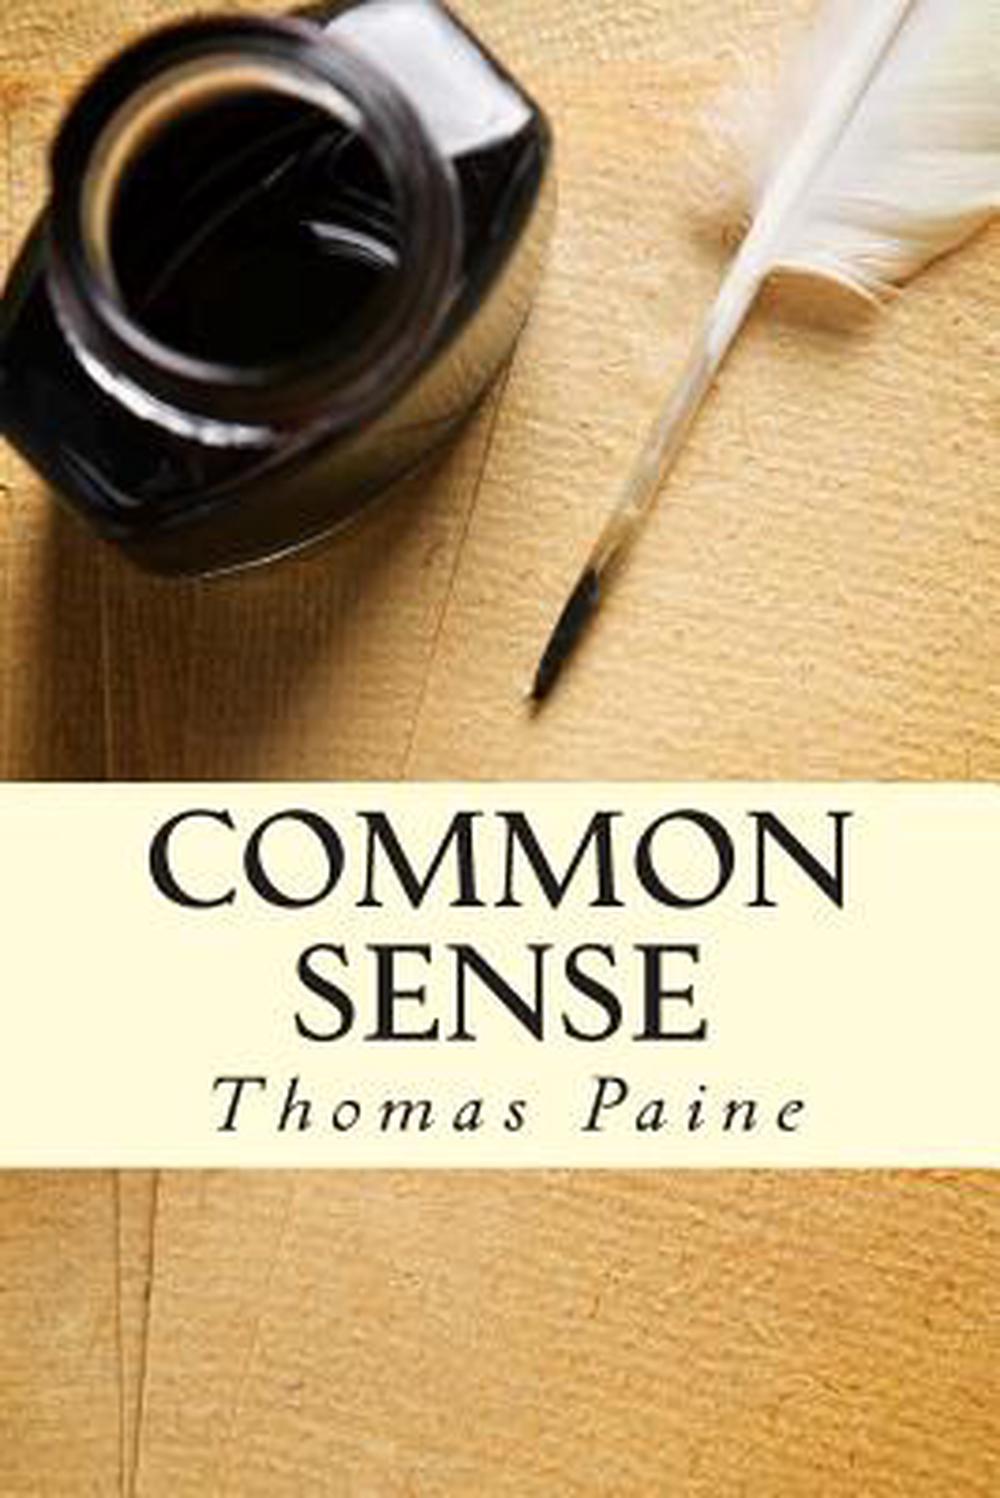 thomas paine and common sense